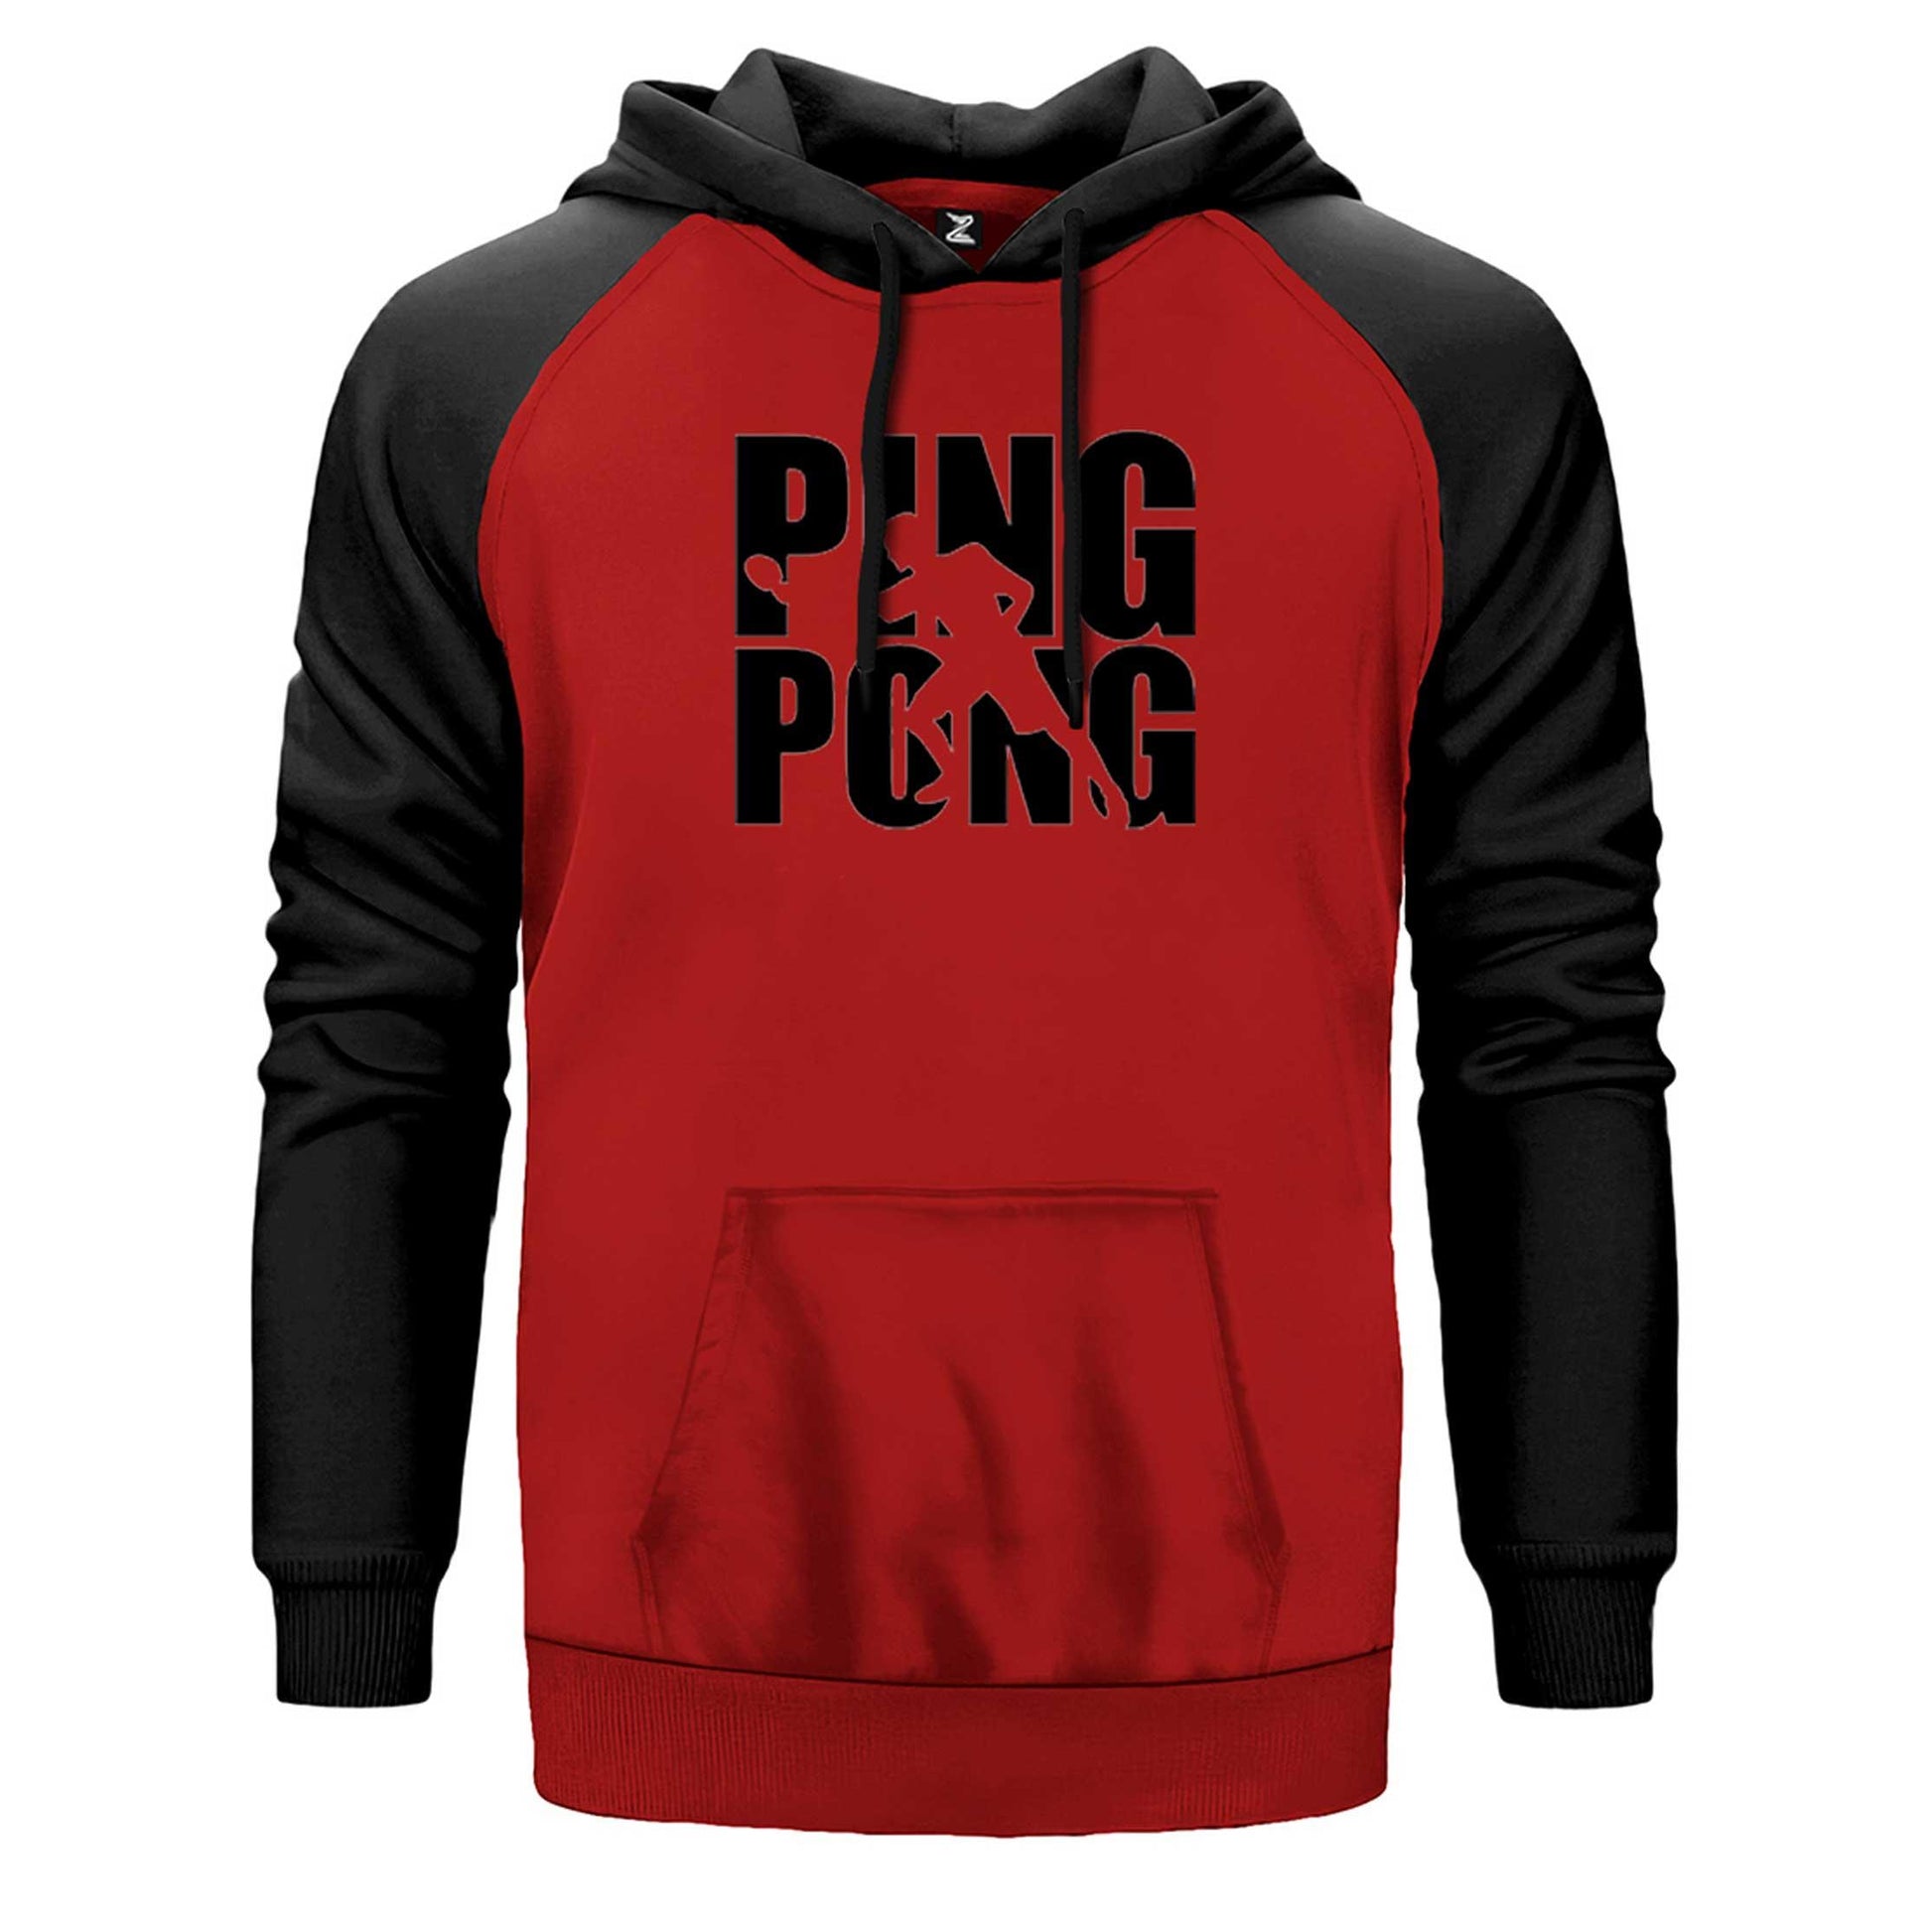 Ping Pong Actor Çift Renk Reglan Kol Sweatshirt - Zepplingiyim